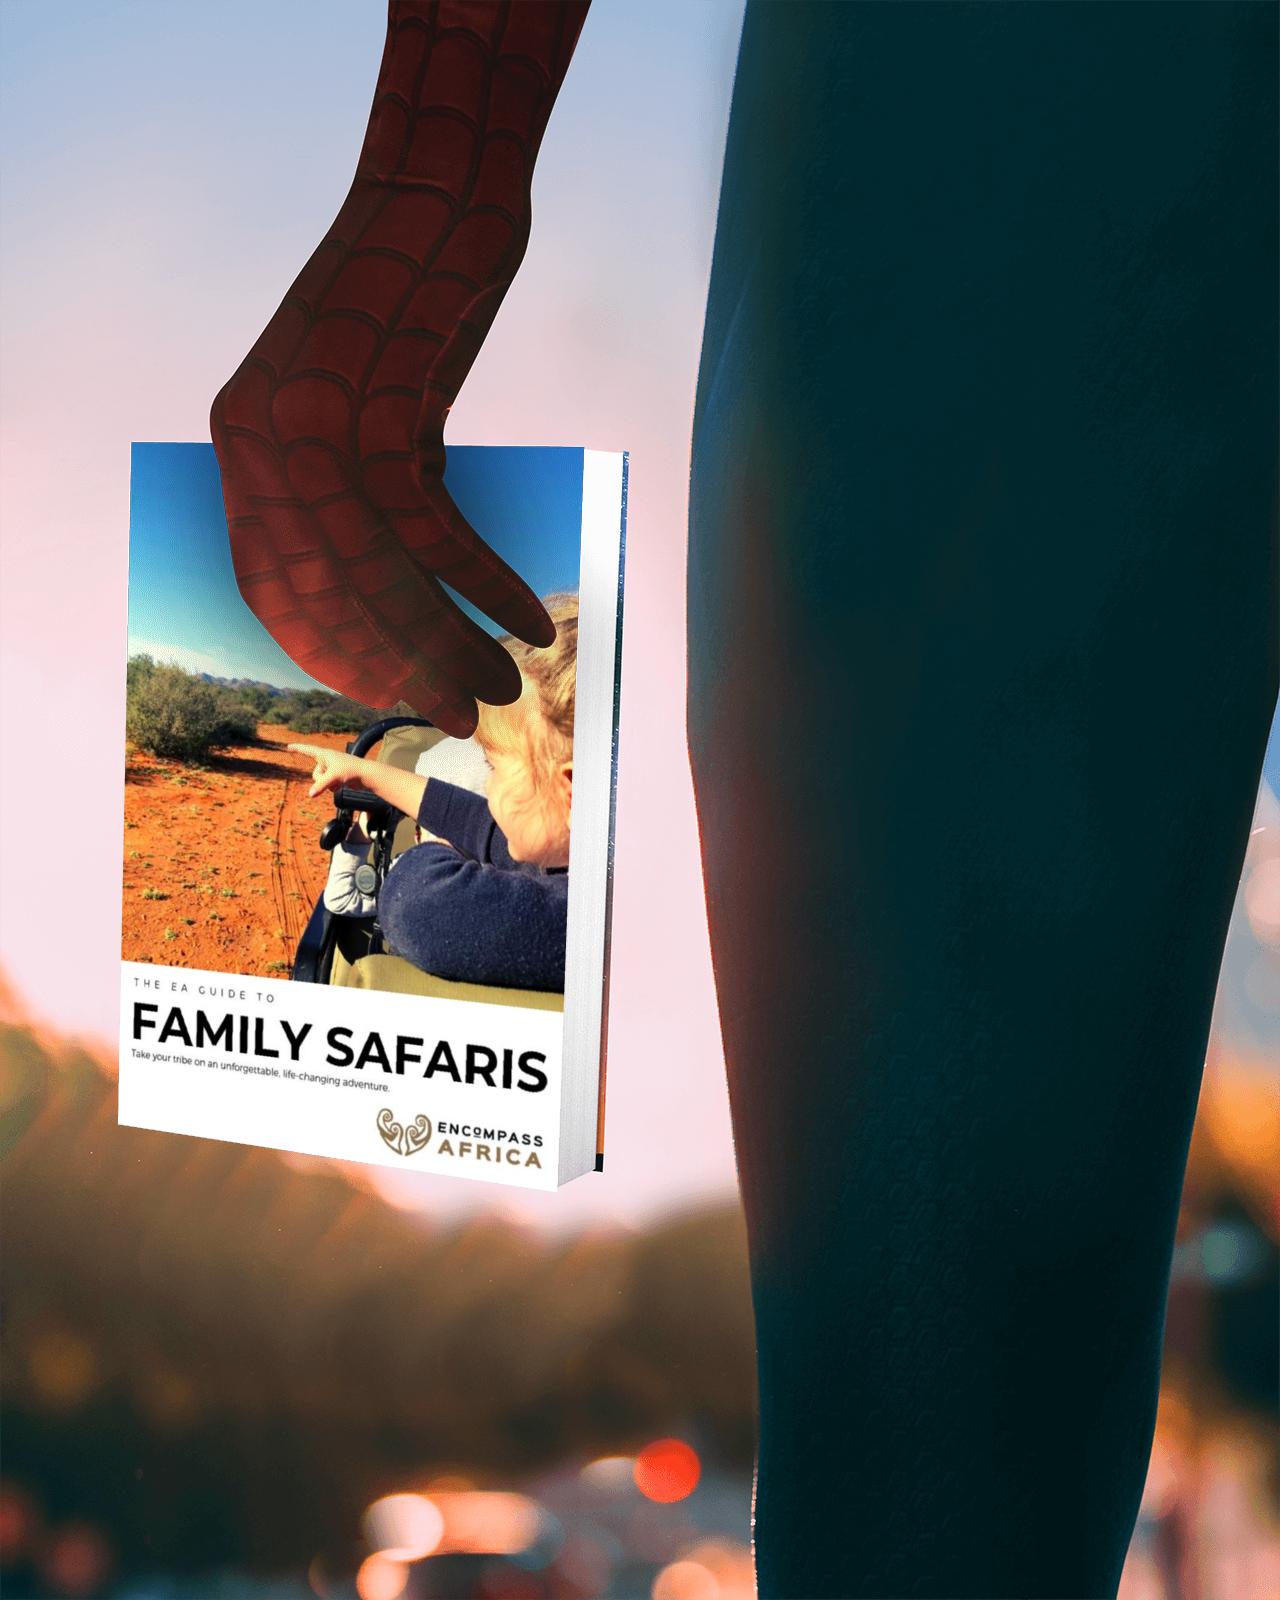 The EA Guide to Family Safaris